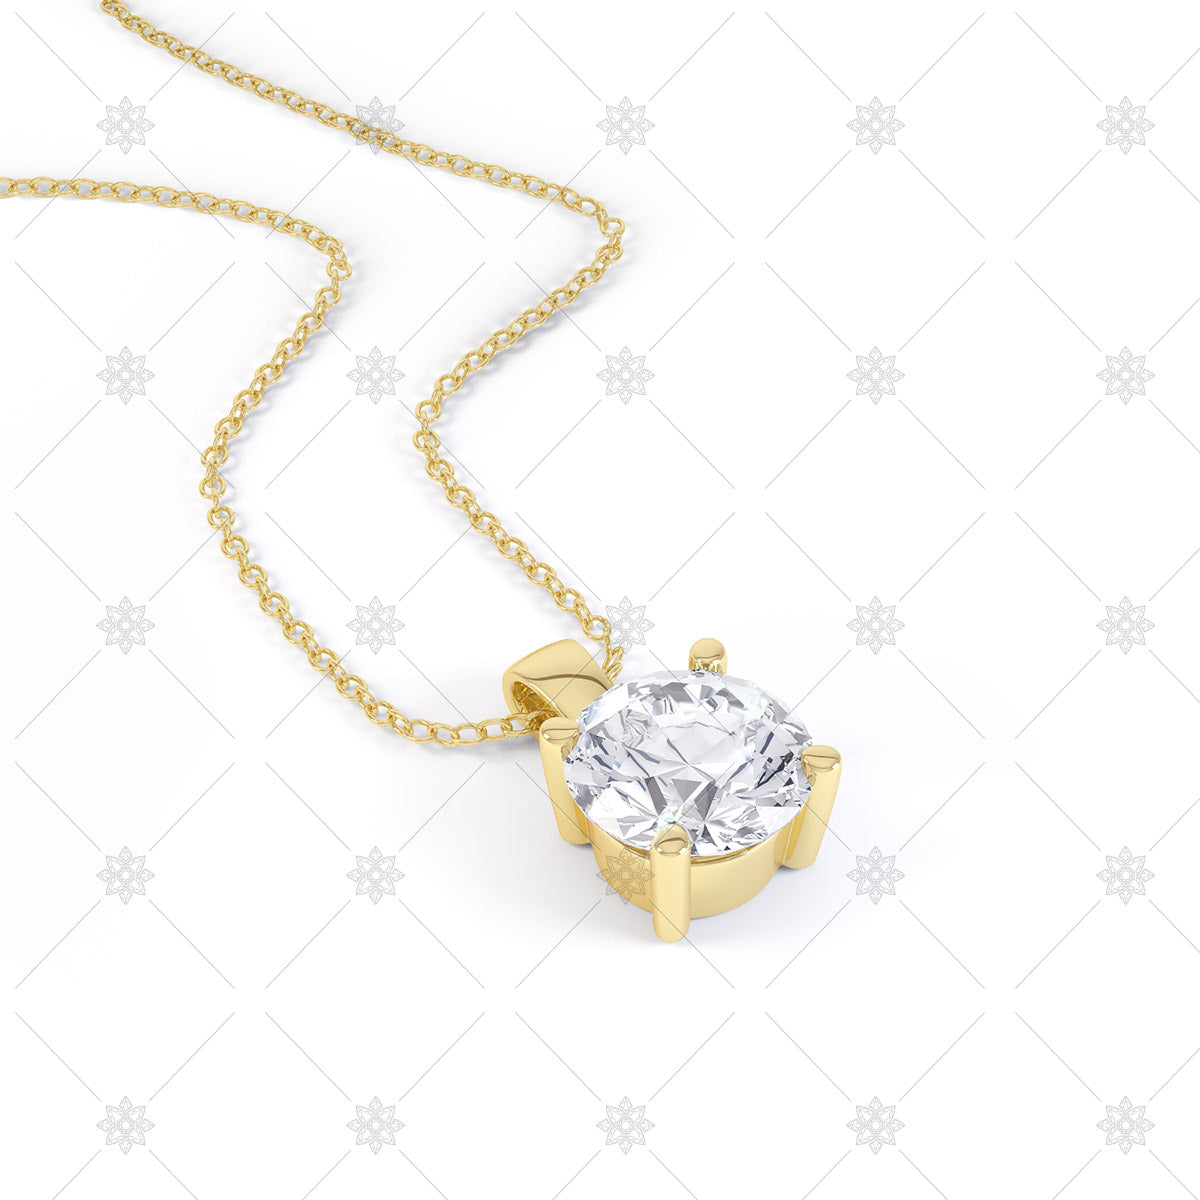 Shop 14K Rose Gold 1.00 Carat Diamond Heart Necklace | Carbon & Hyde